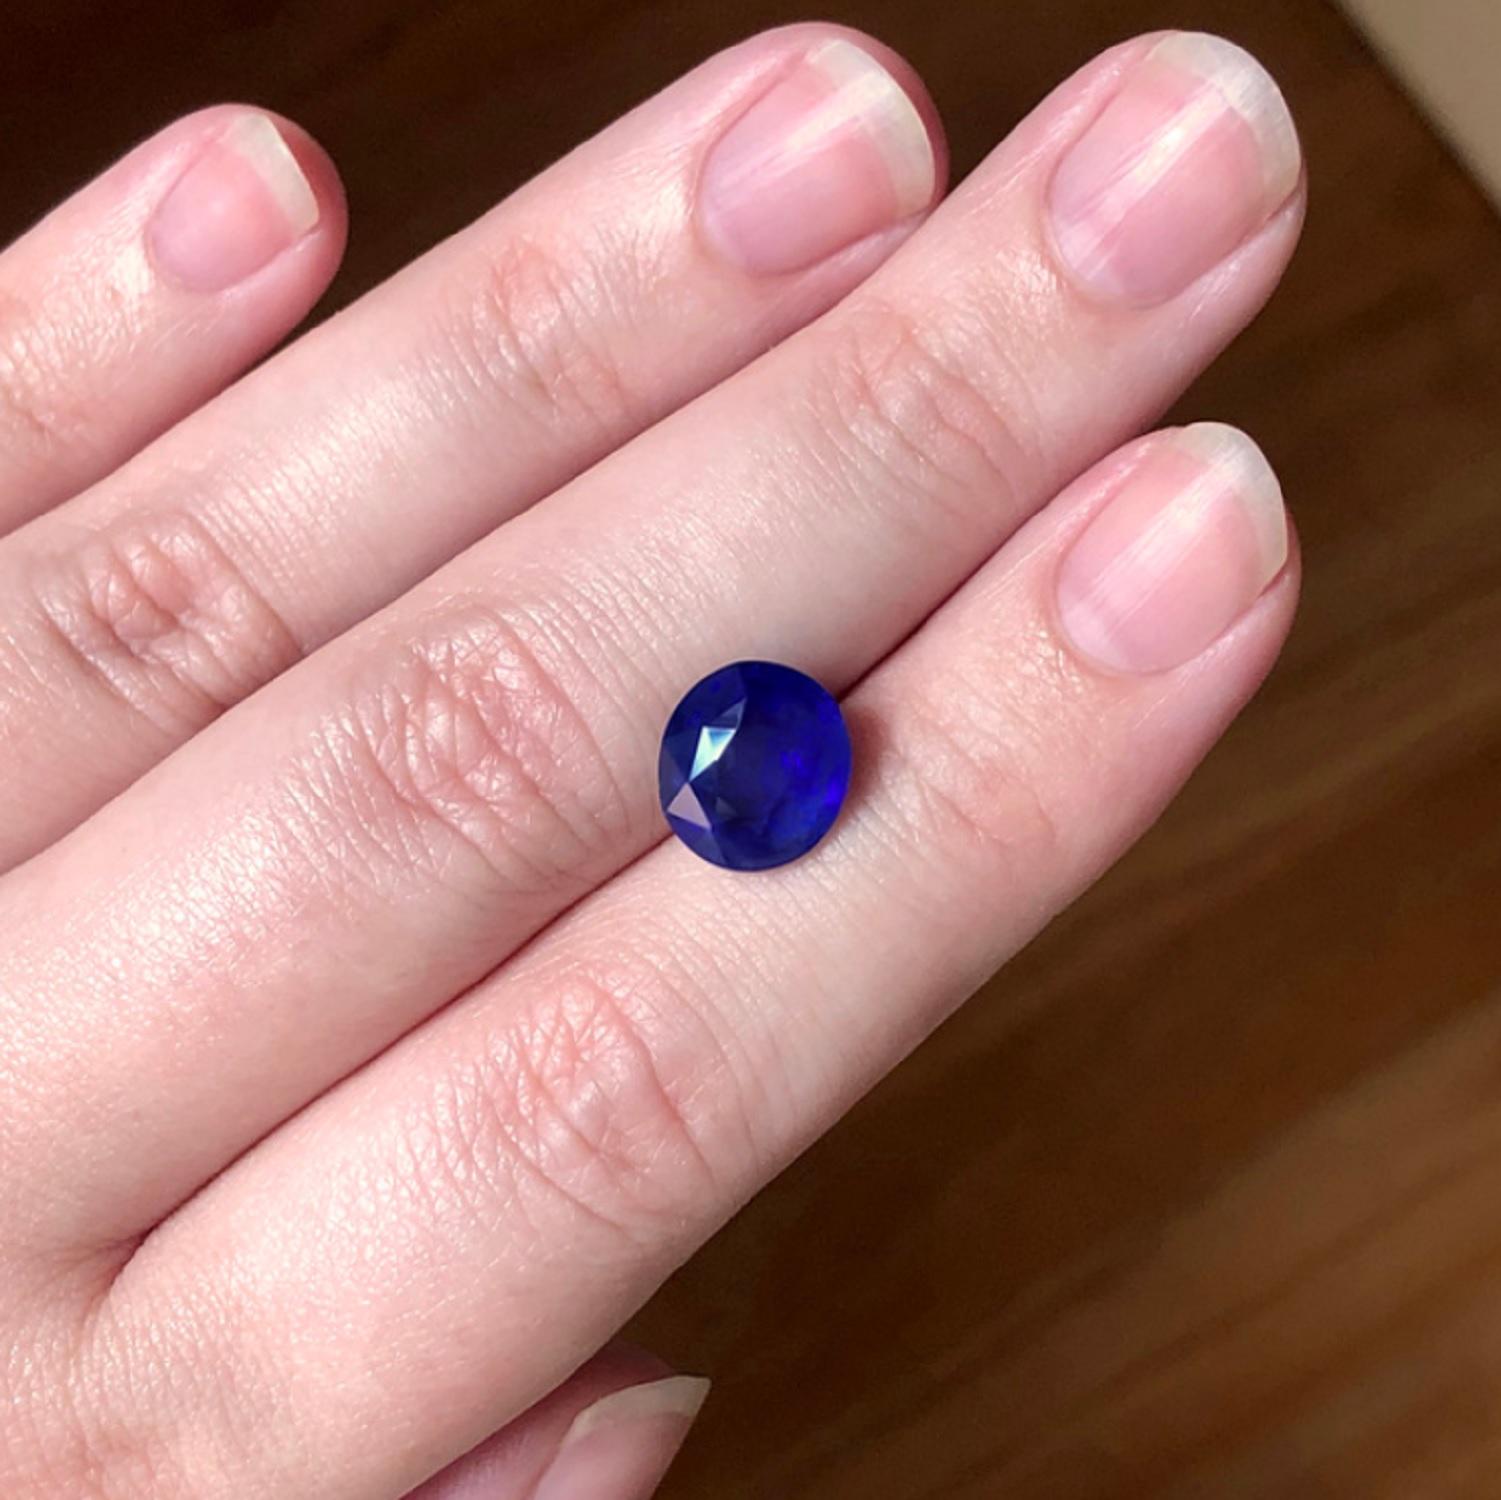 blue sapphire represents